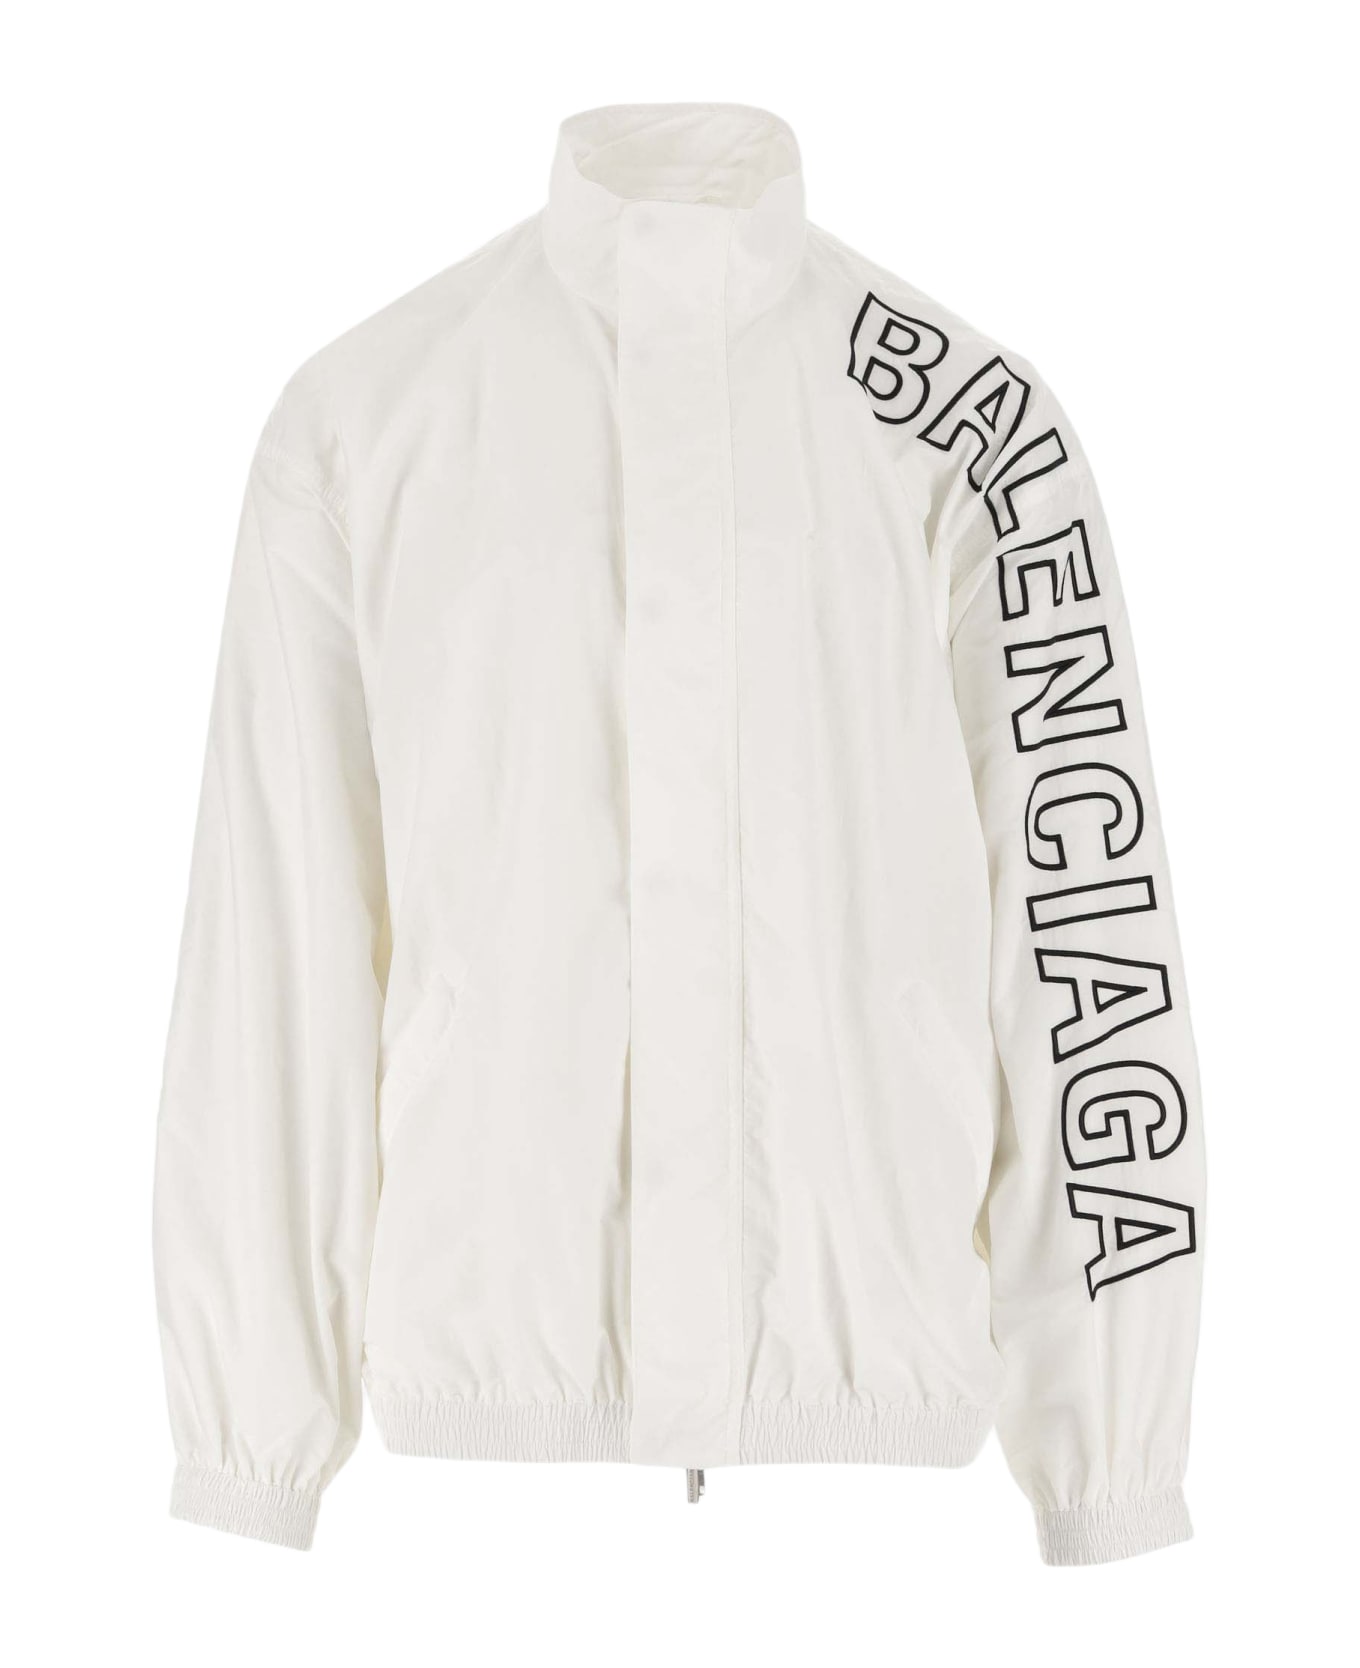 Balenciaga Jacket With Logo - White